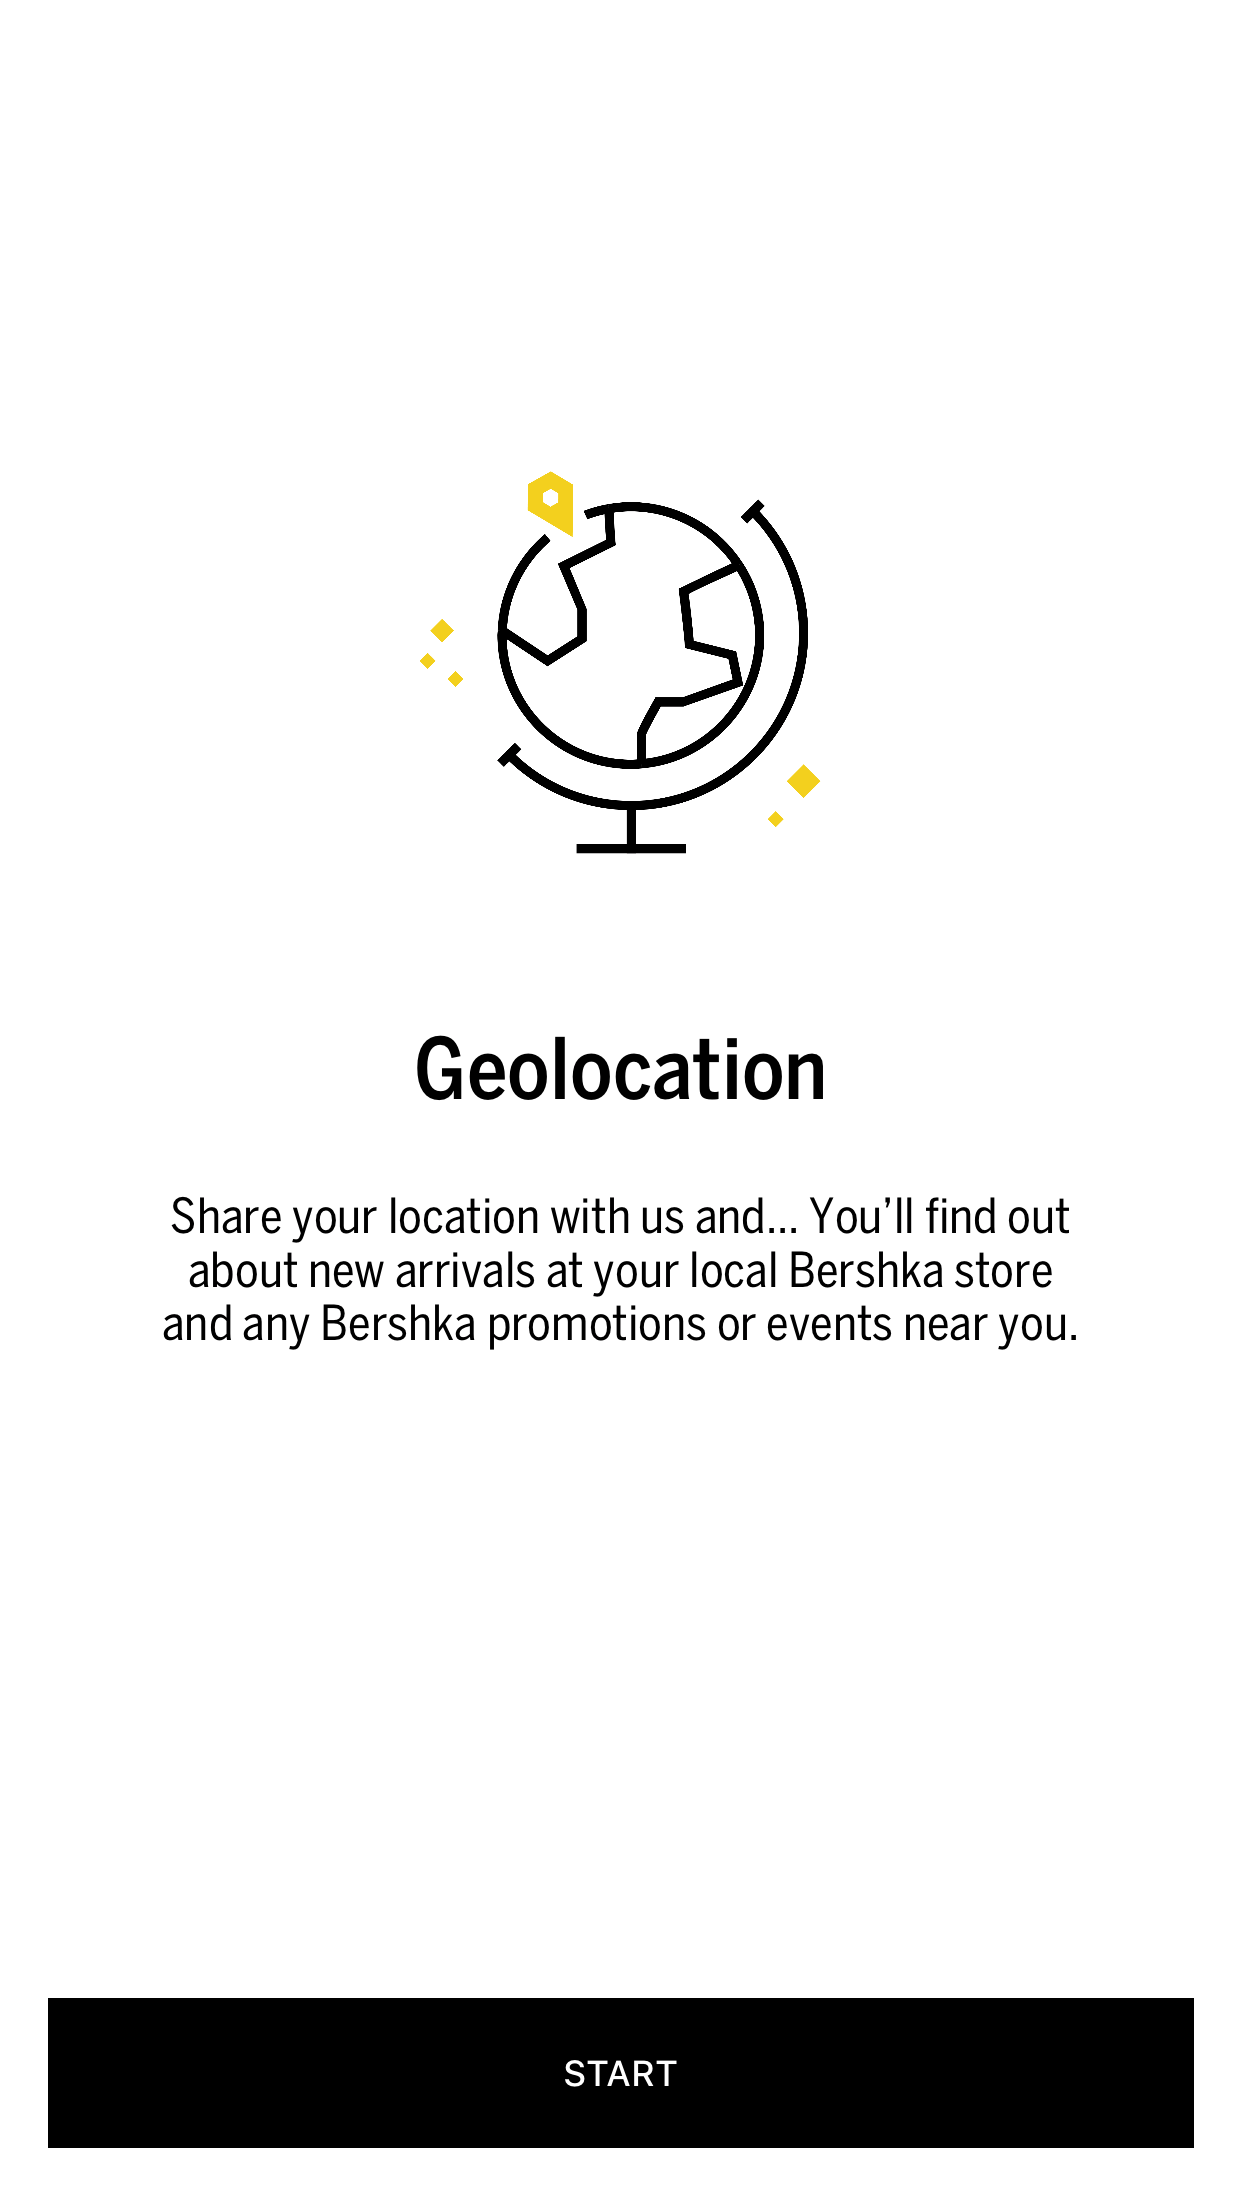 Bershka Mobile App Location Tracking Permission